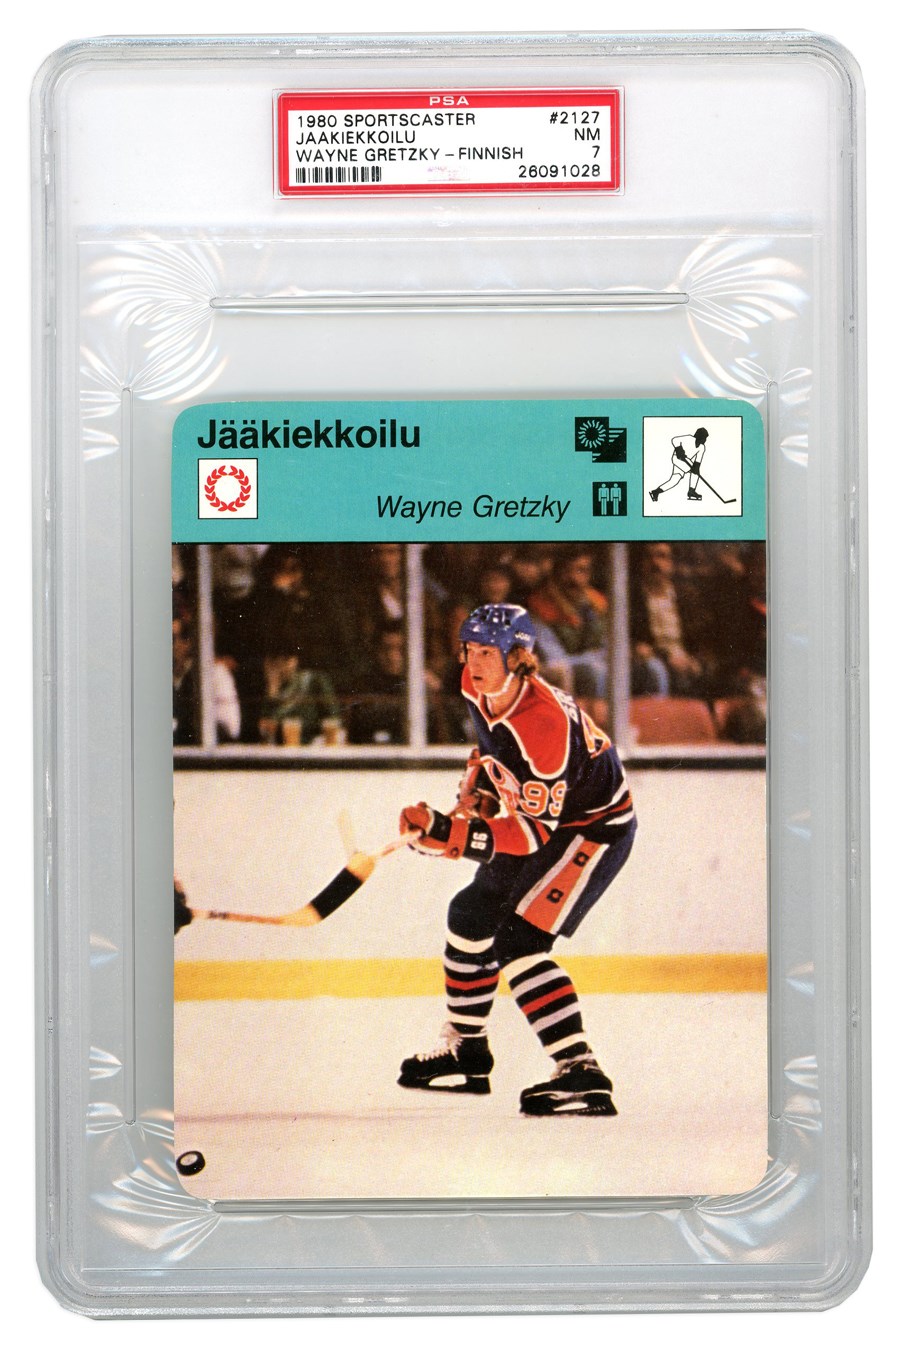 - RARE 1980 Wayne Gretzky "Finnish" Sportscaster Hockey Card PSA7 NM